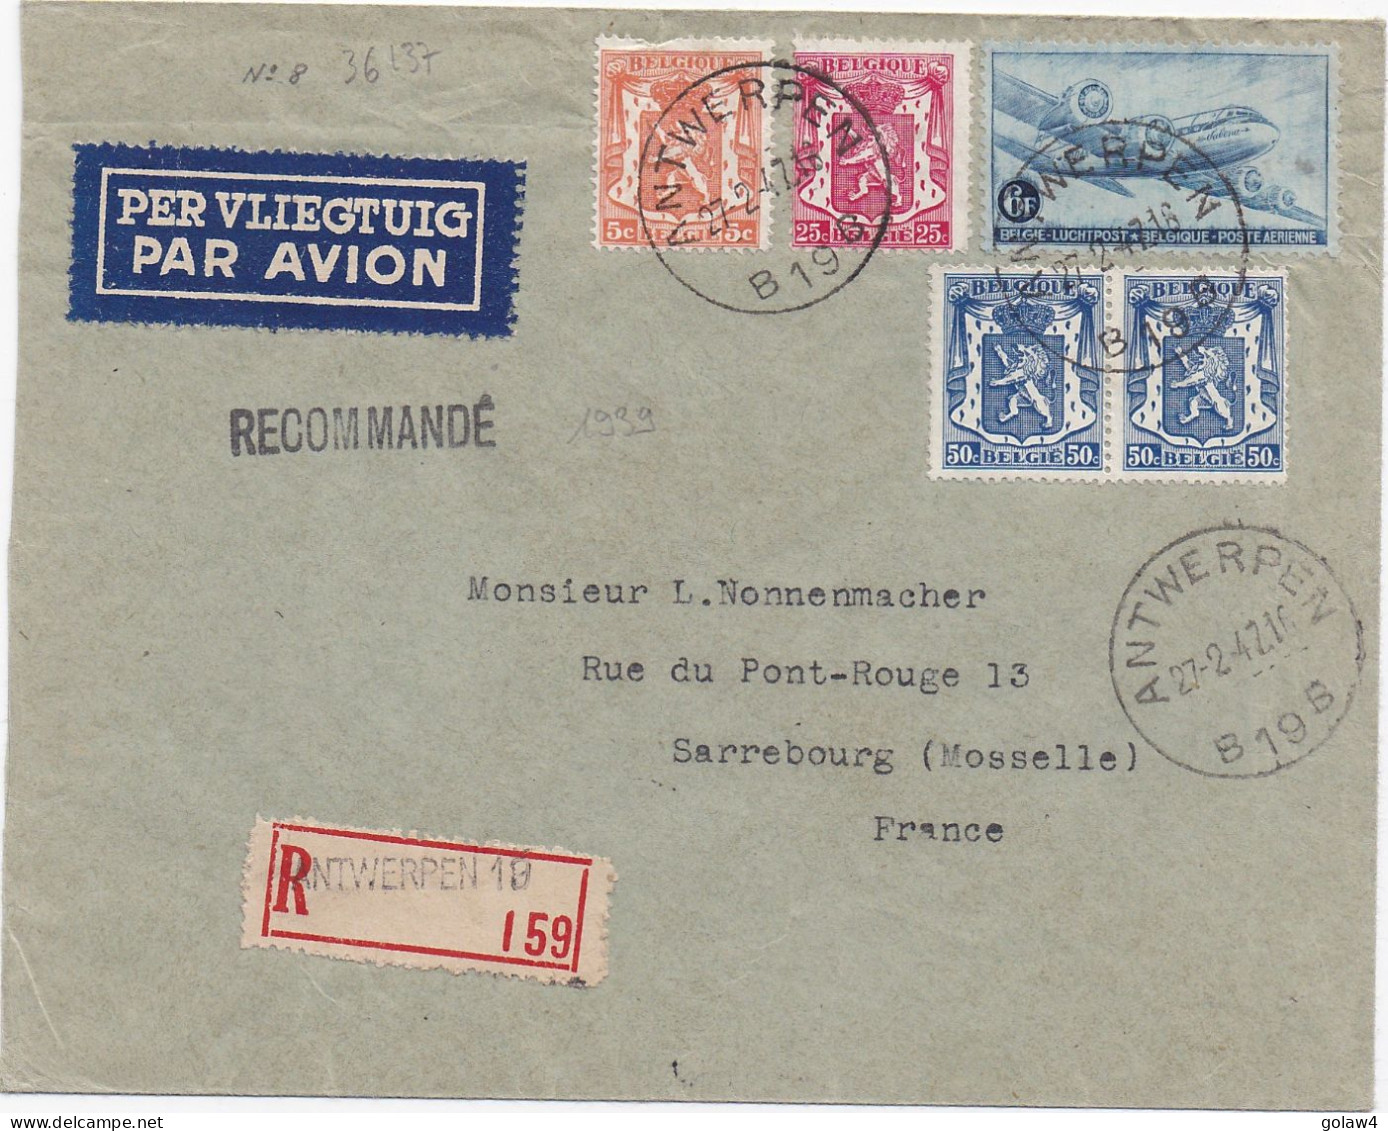 36137# POSTE AERIENNE LETTRE RECOMMANDEE PAR AVION Obl ANTWERPEN 1947 SARREBOURG MOSELLE - Storia Postale